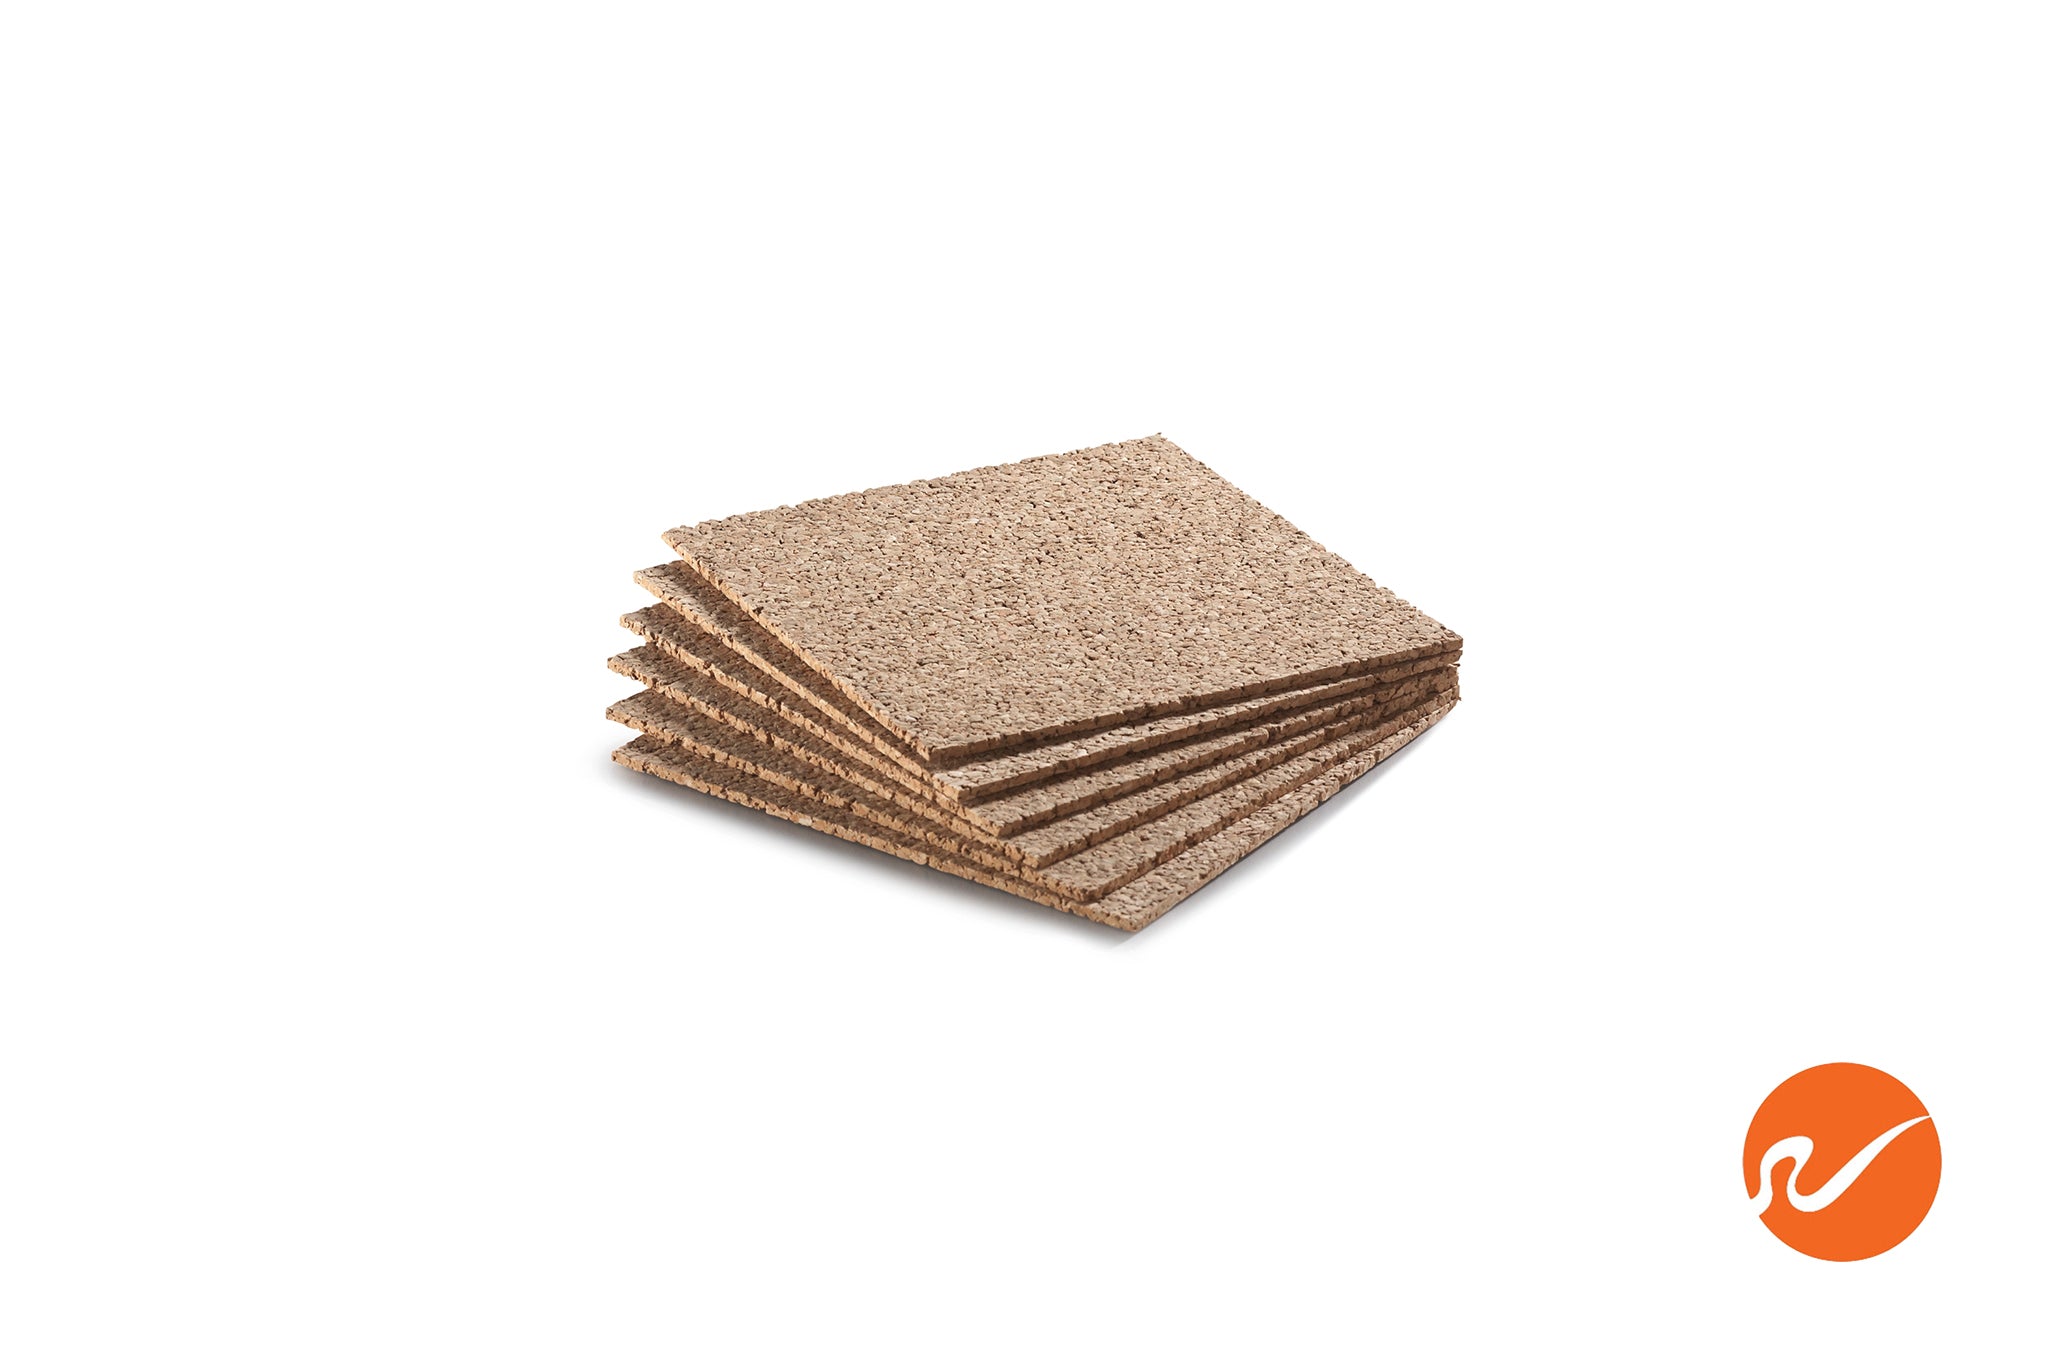 1/4 x 9 Cork Squares - buy cork pads, trivets